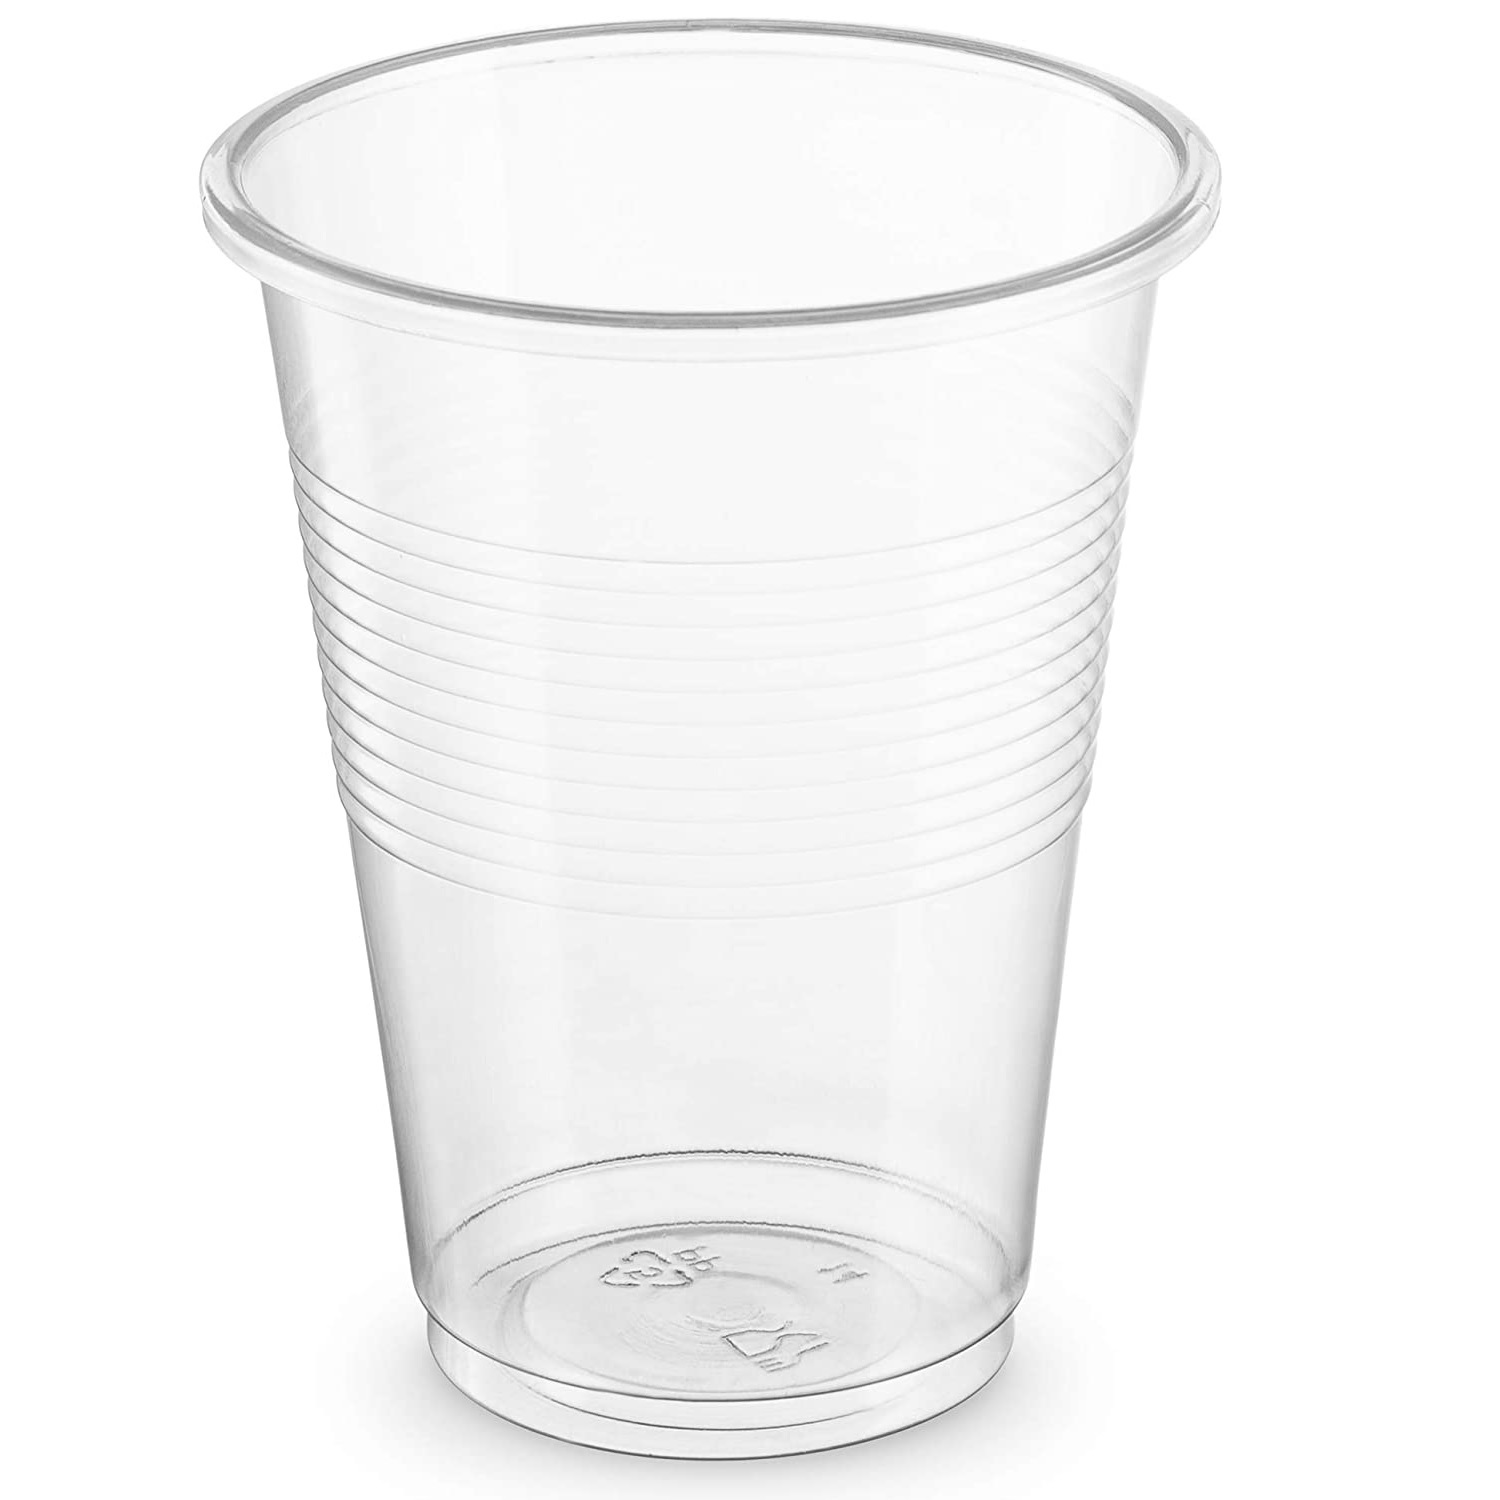 7 Oz Plastic Cups